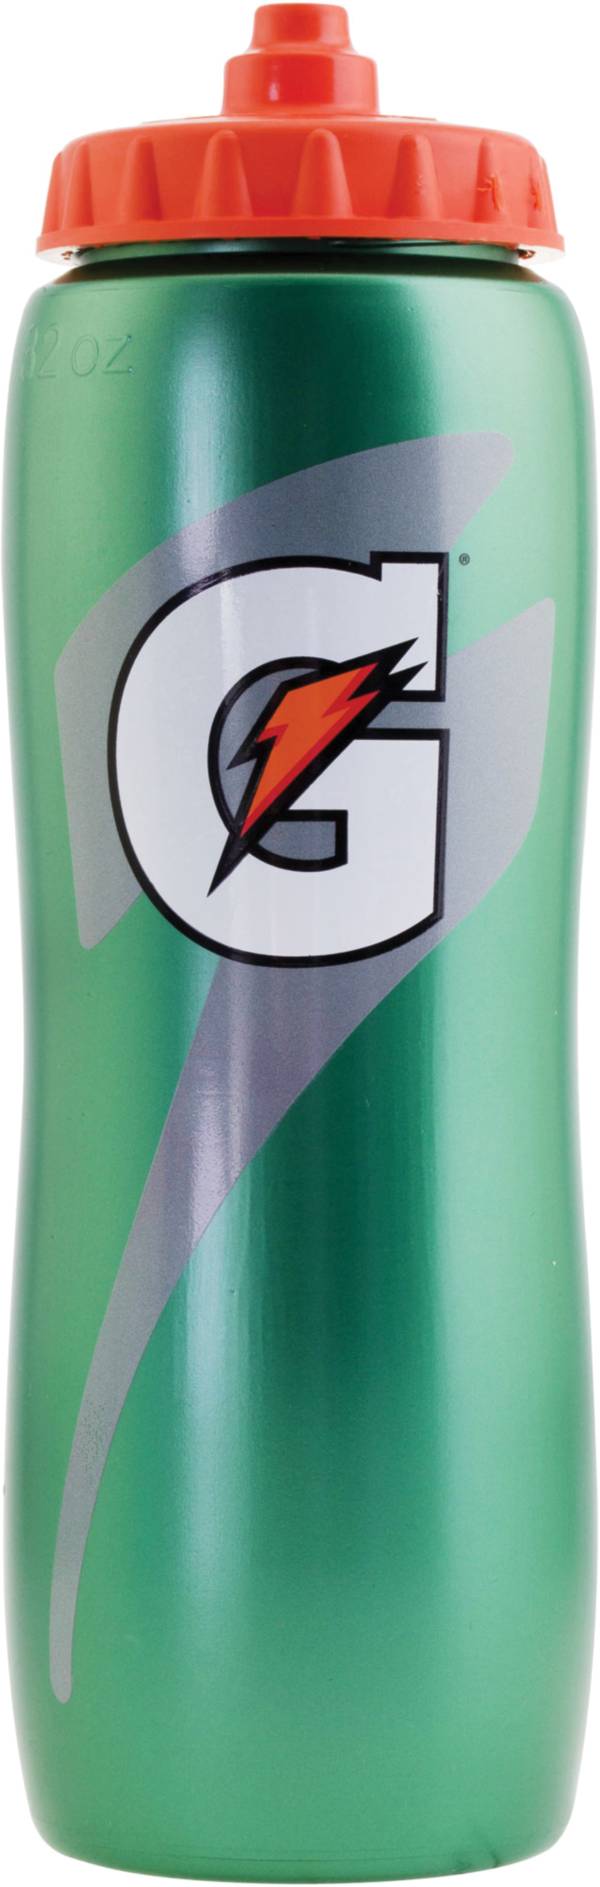 Retro Gatorade Bottle 32-ounce Squeeze Green Orange Lightning Bolt w/ White Cap 